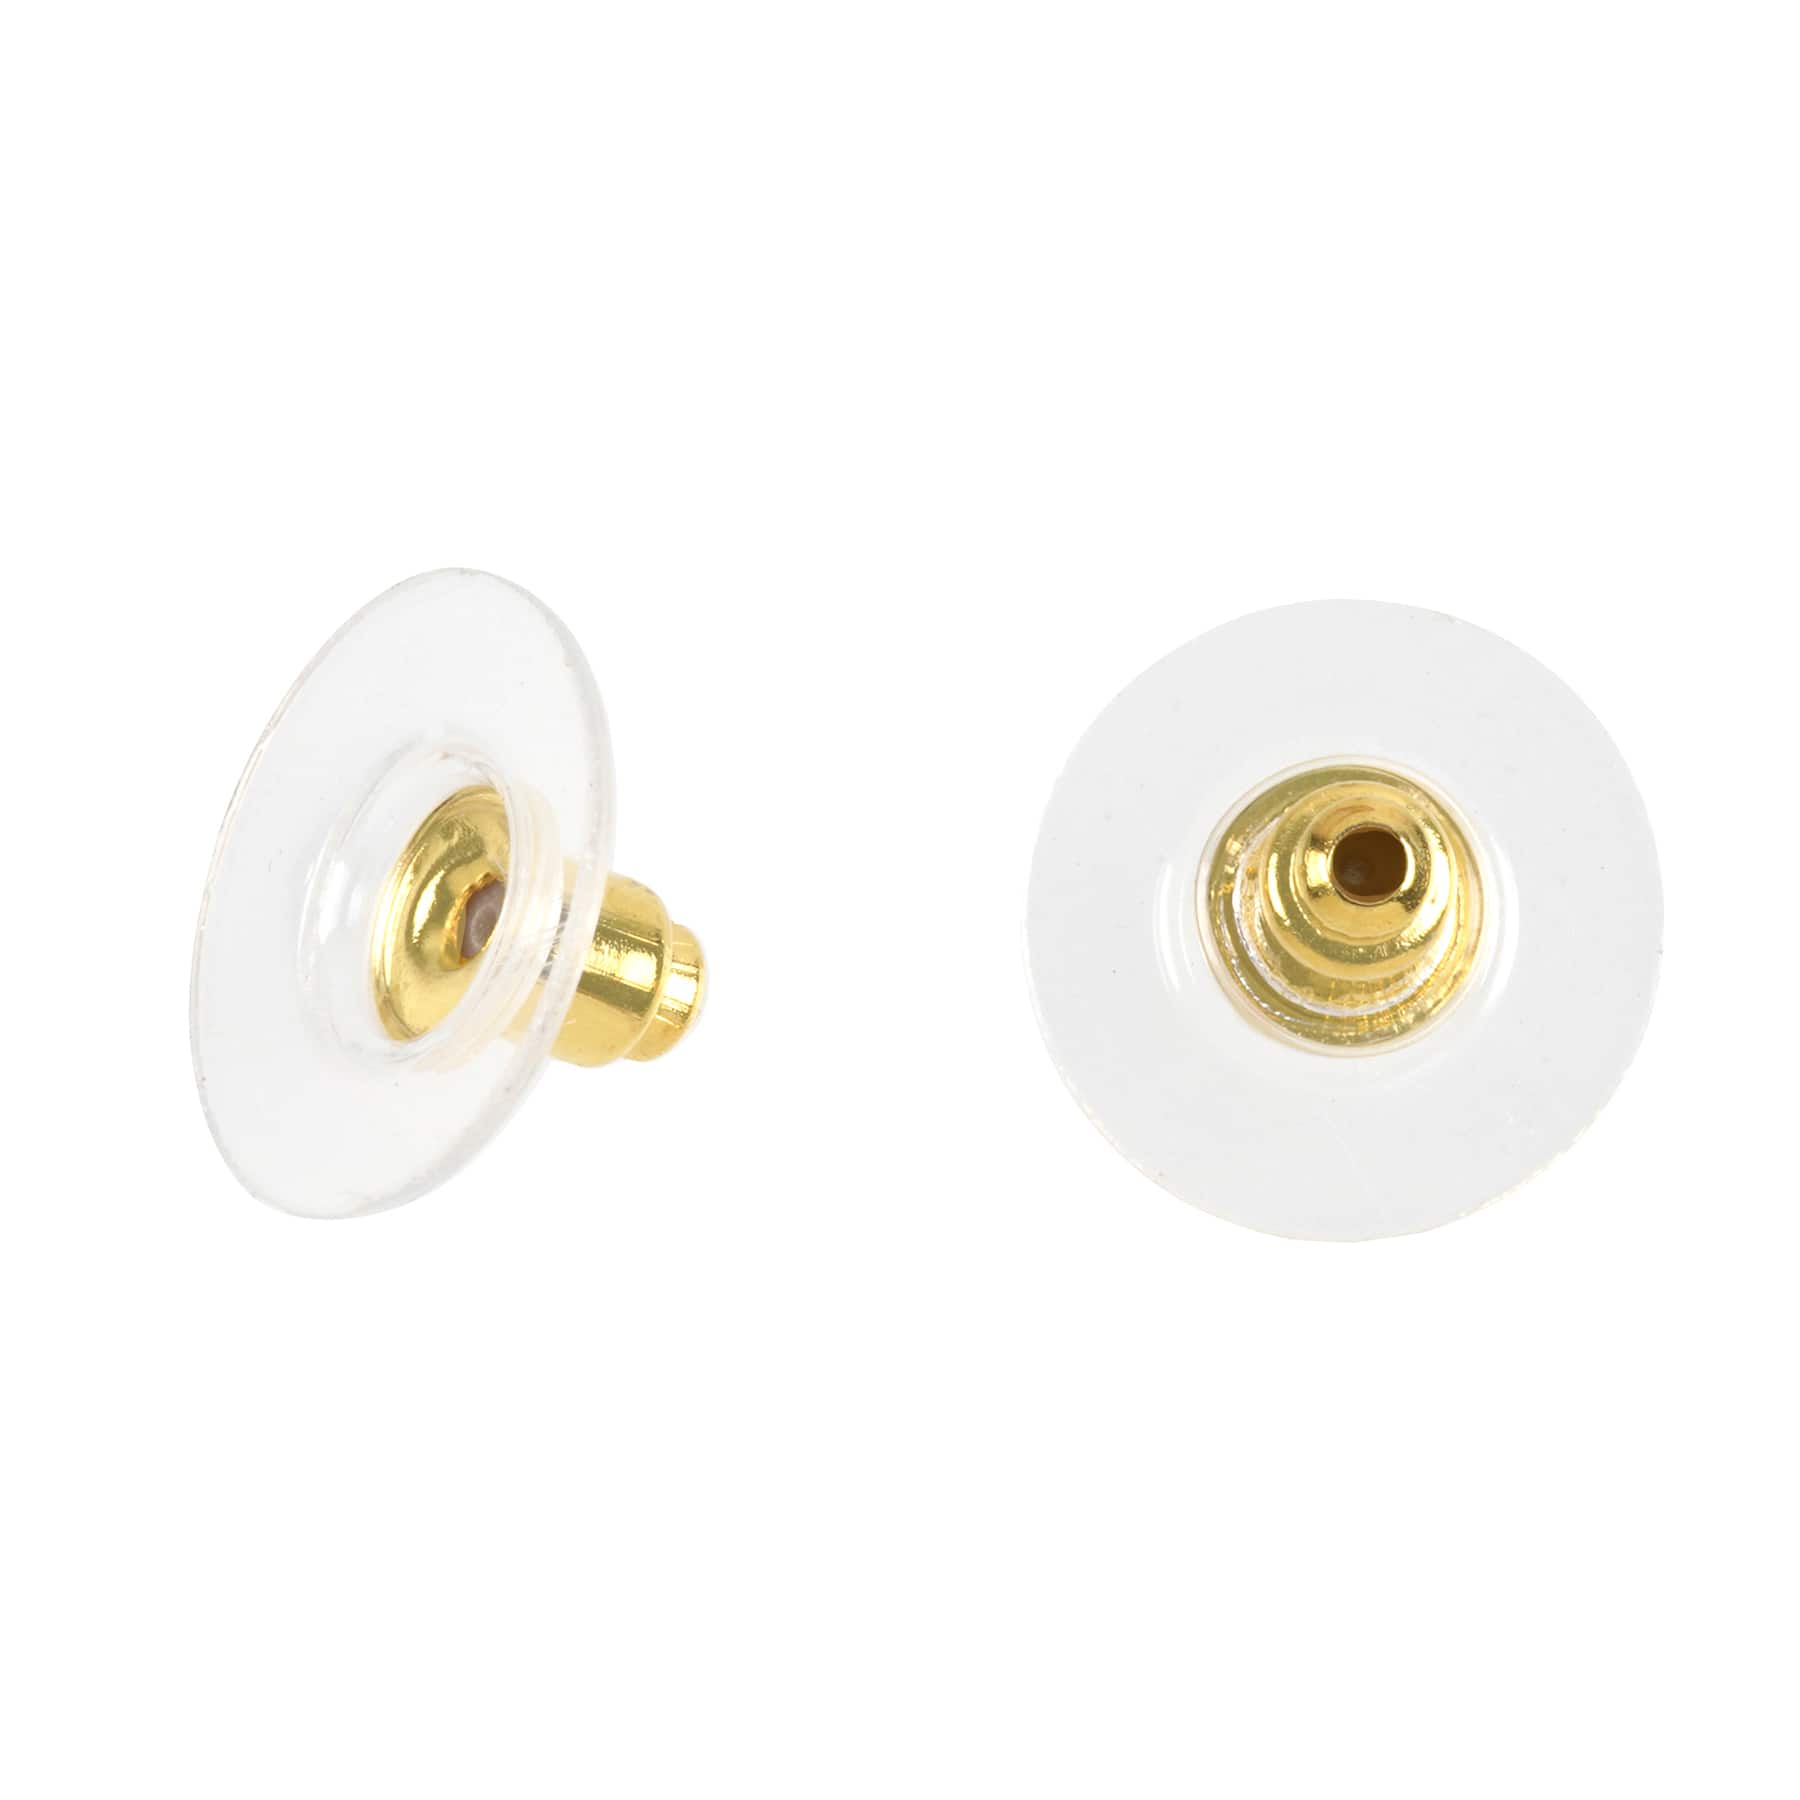 Assorted Gold Earring Backs by Bead Landing™